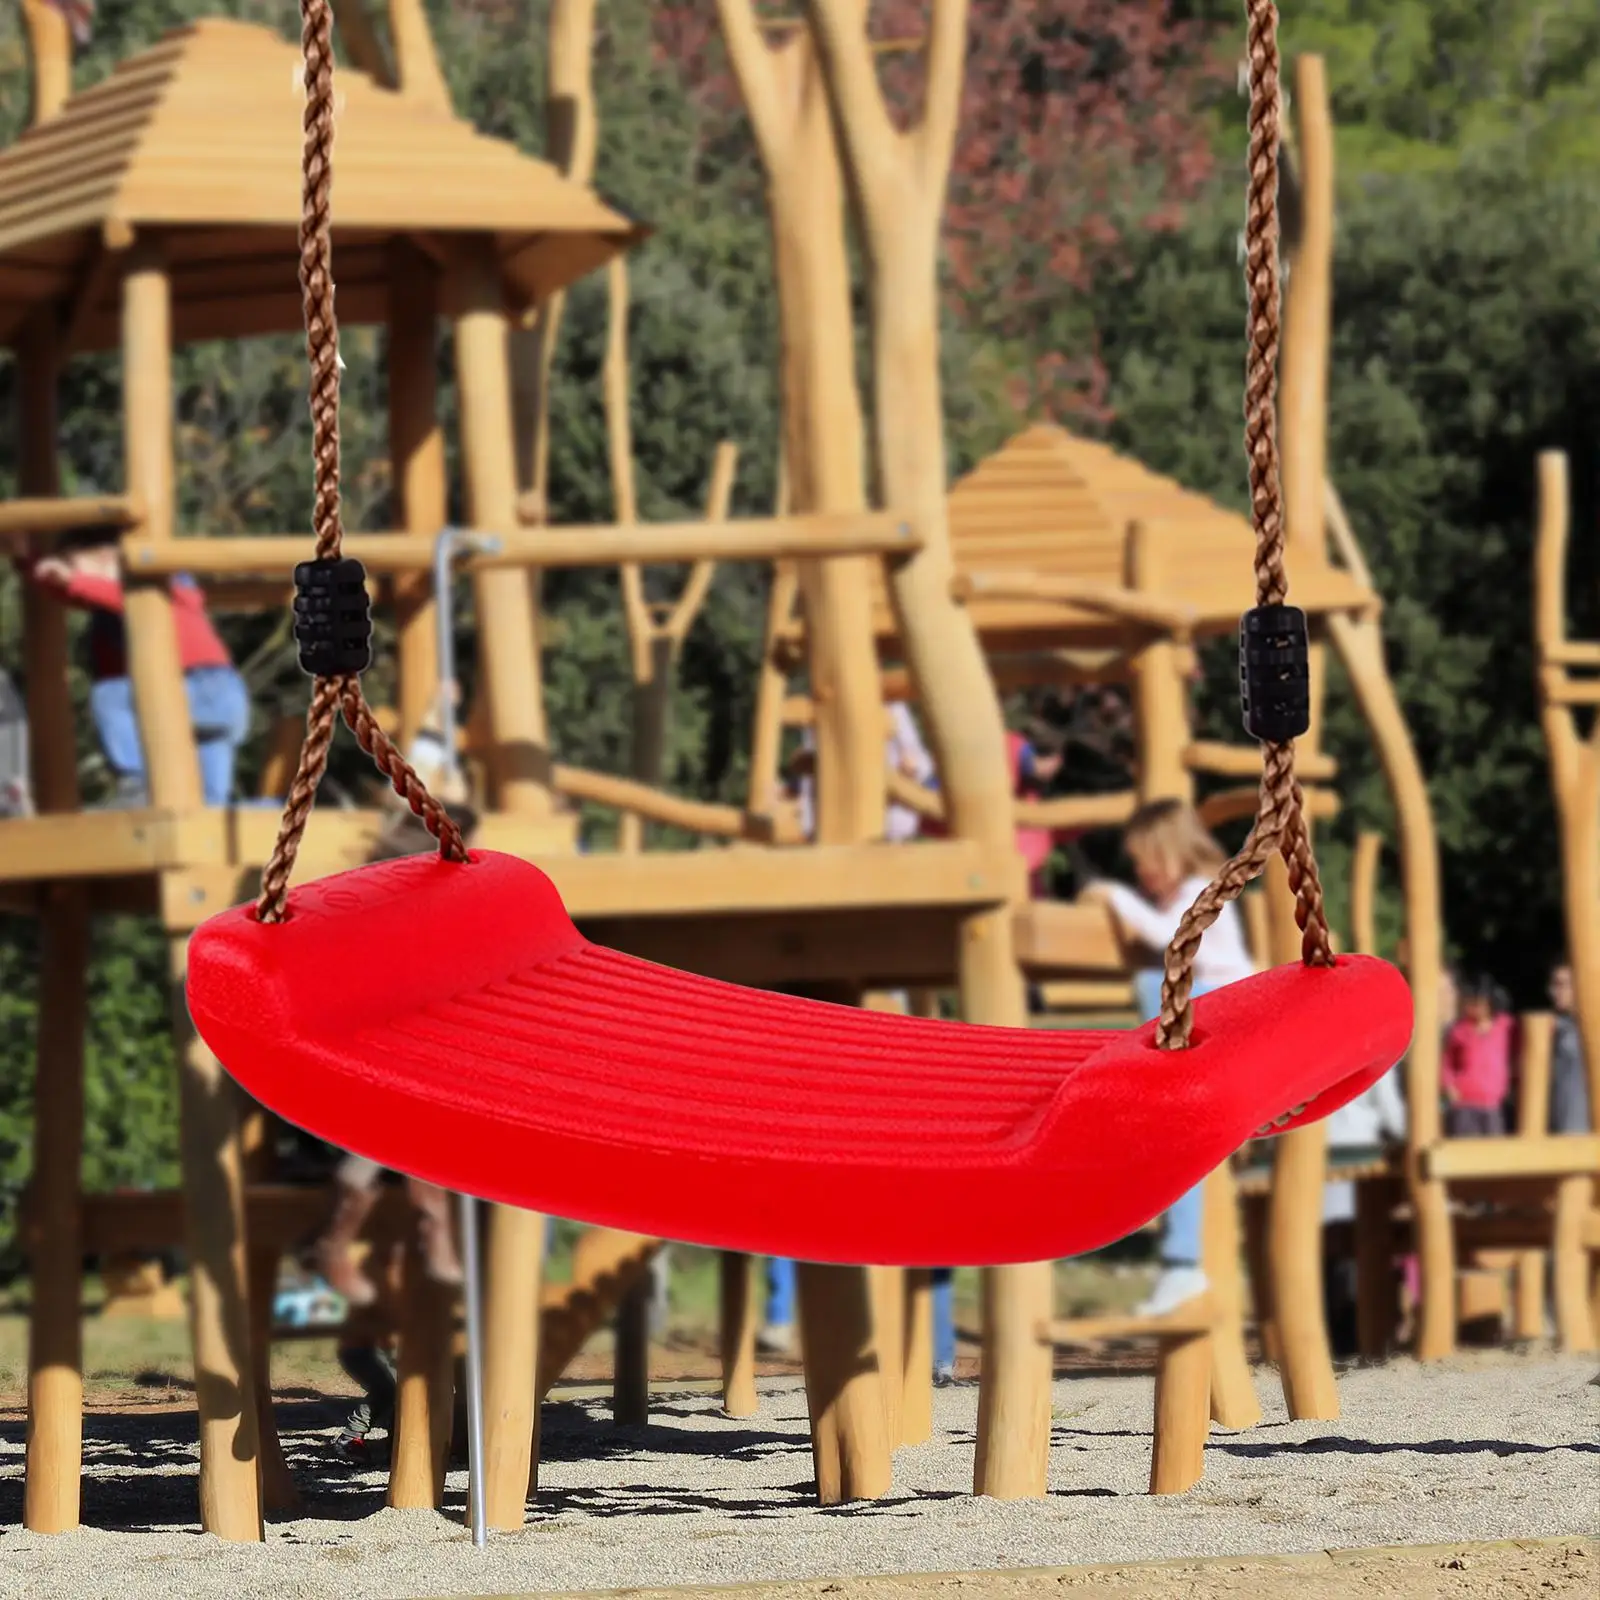 Hanging Children`s Swing Set Flying Toy with Height Adjustable Ropes Plastic Swing Seat for Garden Backyard Indoor Outdoor Yard